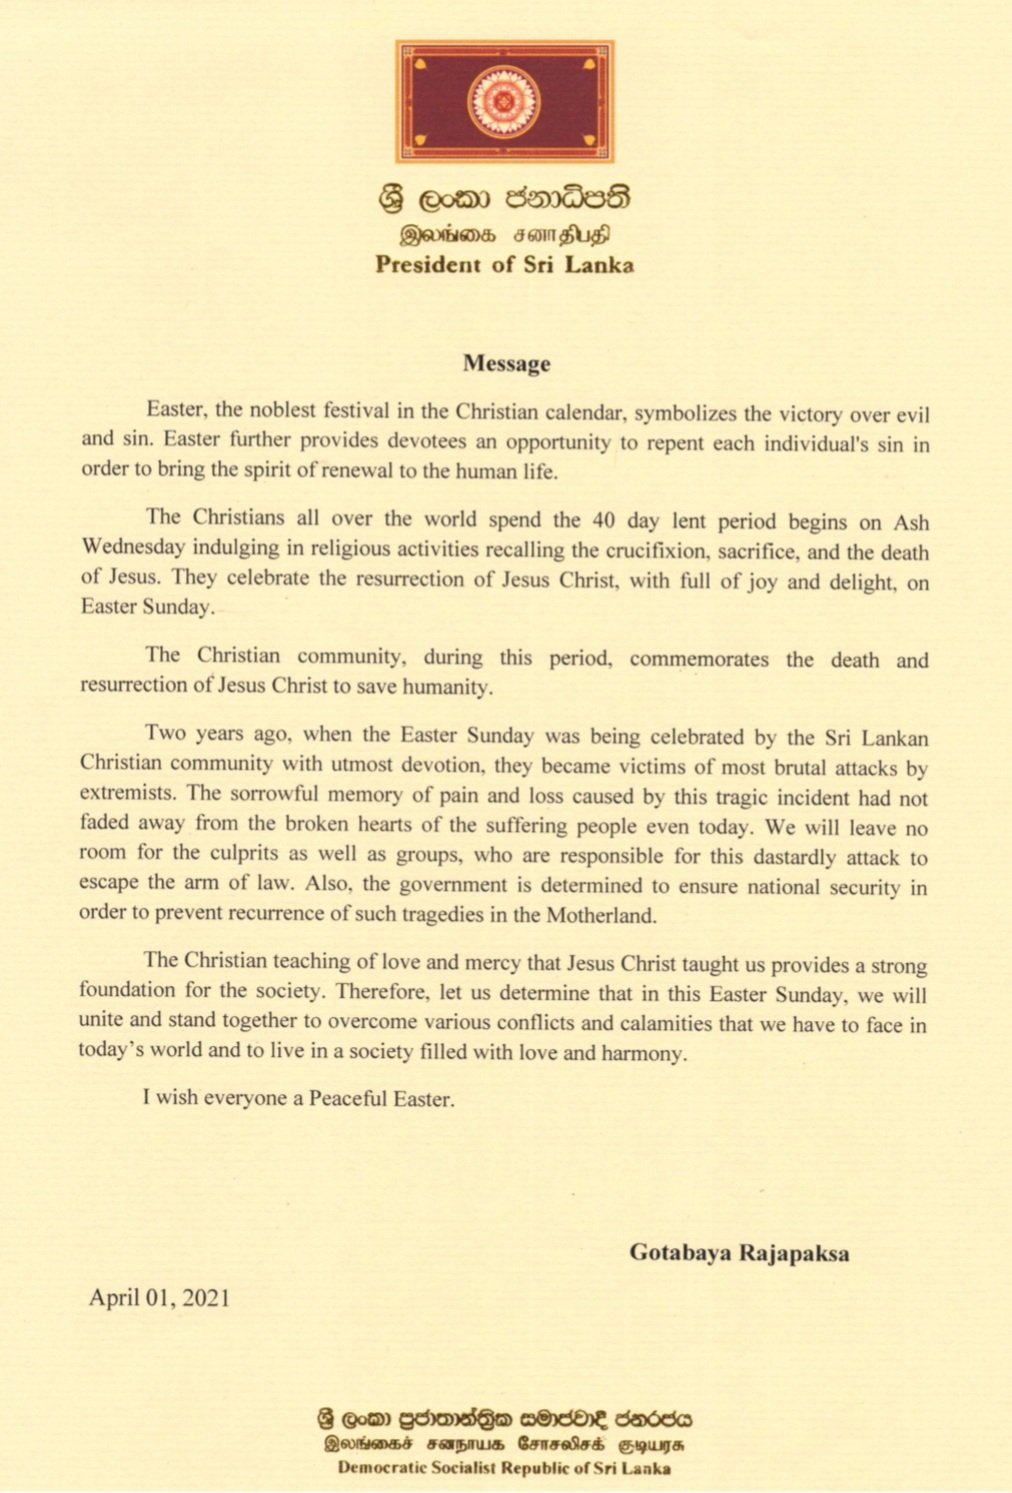 H.E. the President Gotabaya Rajapaksa's Message for the Easter Sunday, 04 April 2021